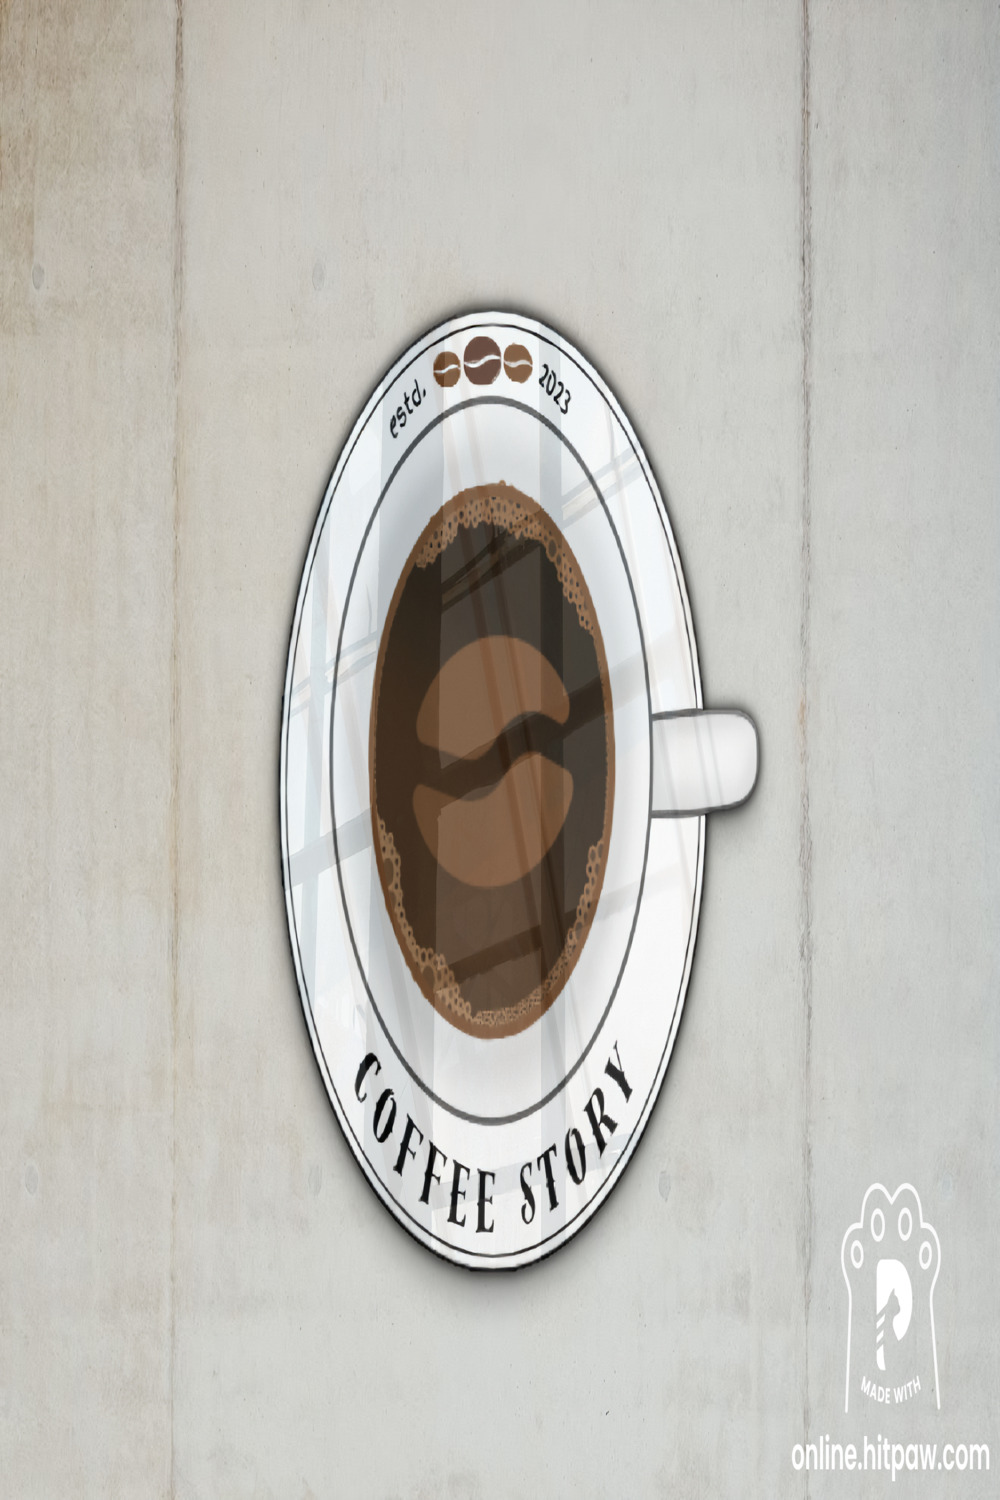 Logo coffee, distinctive coffee pinterest preview image.